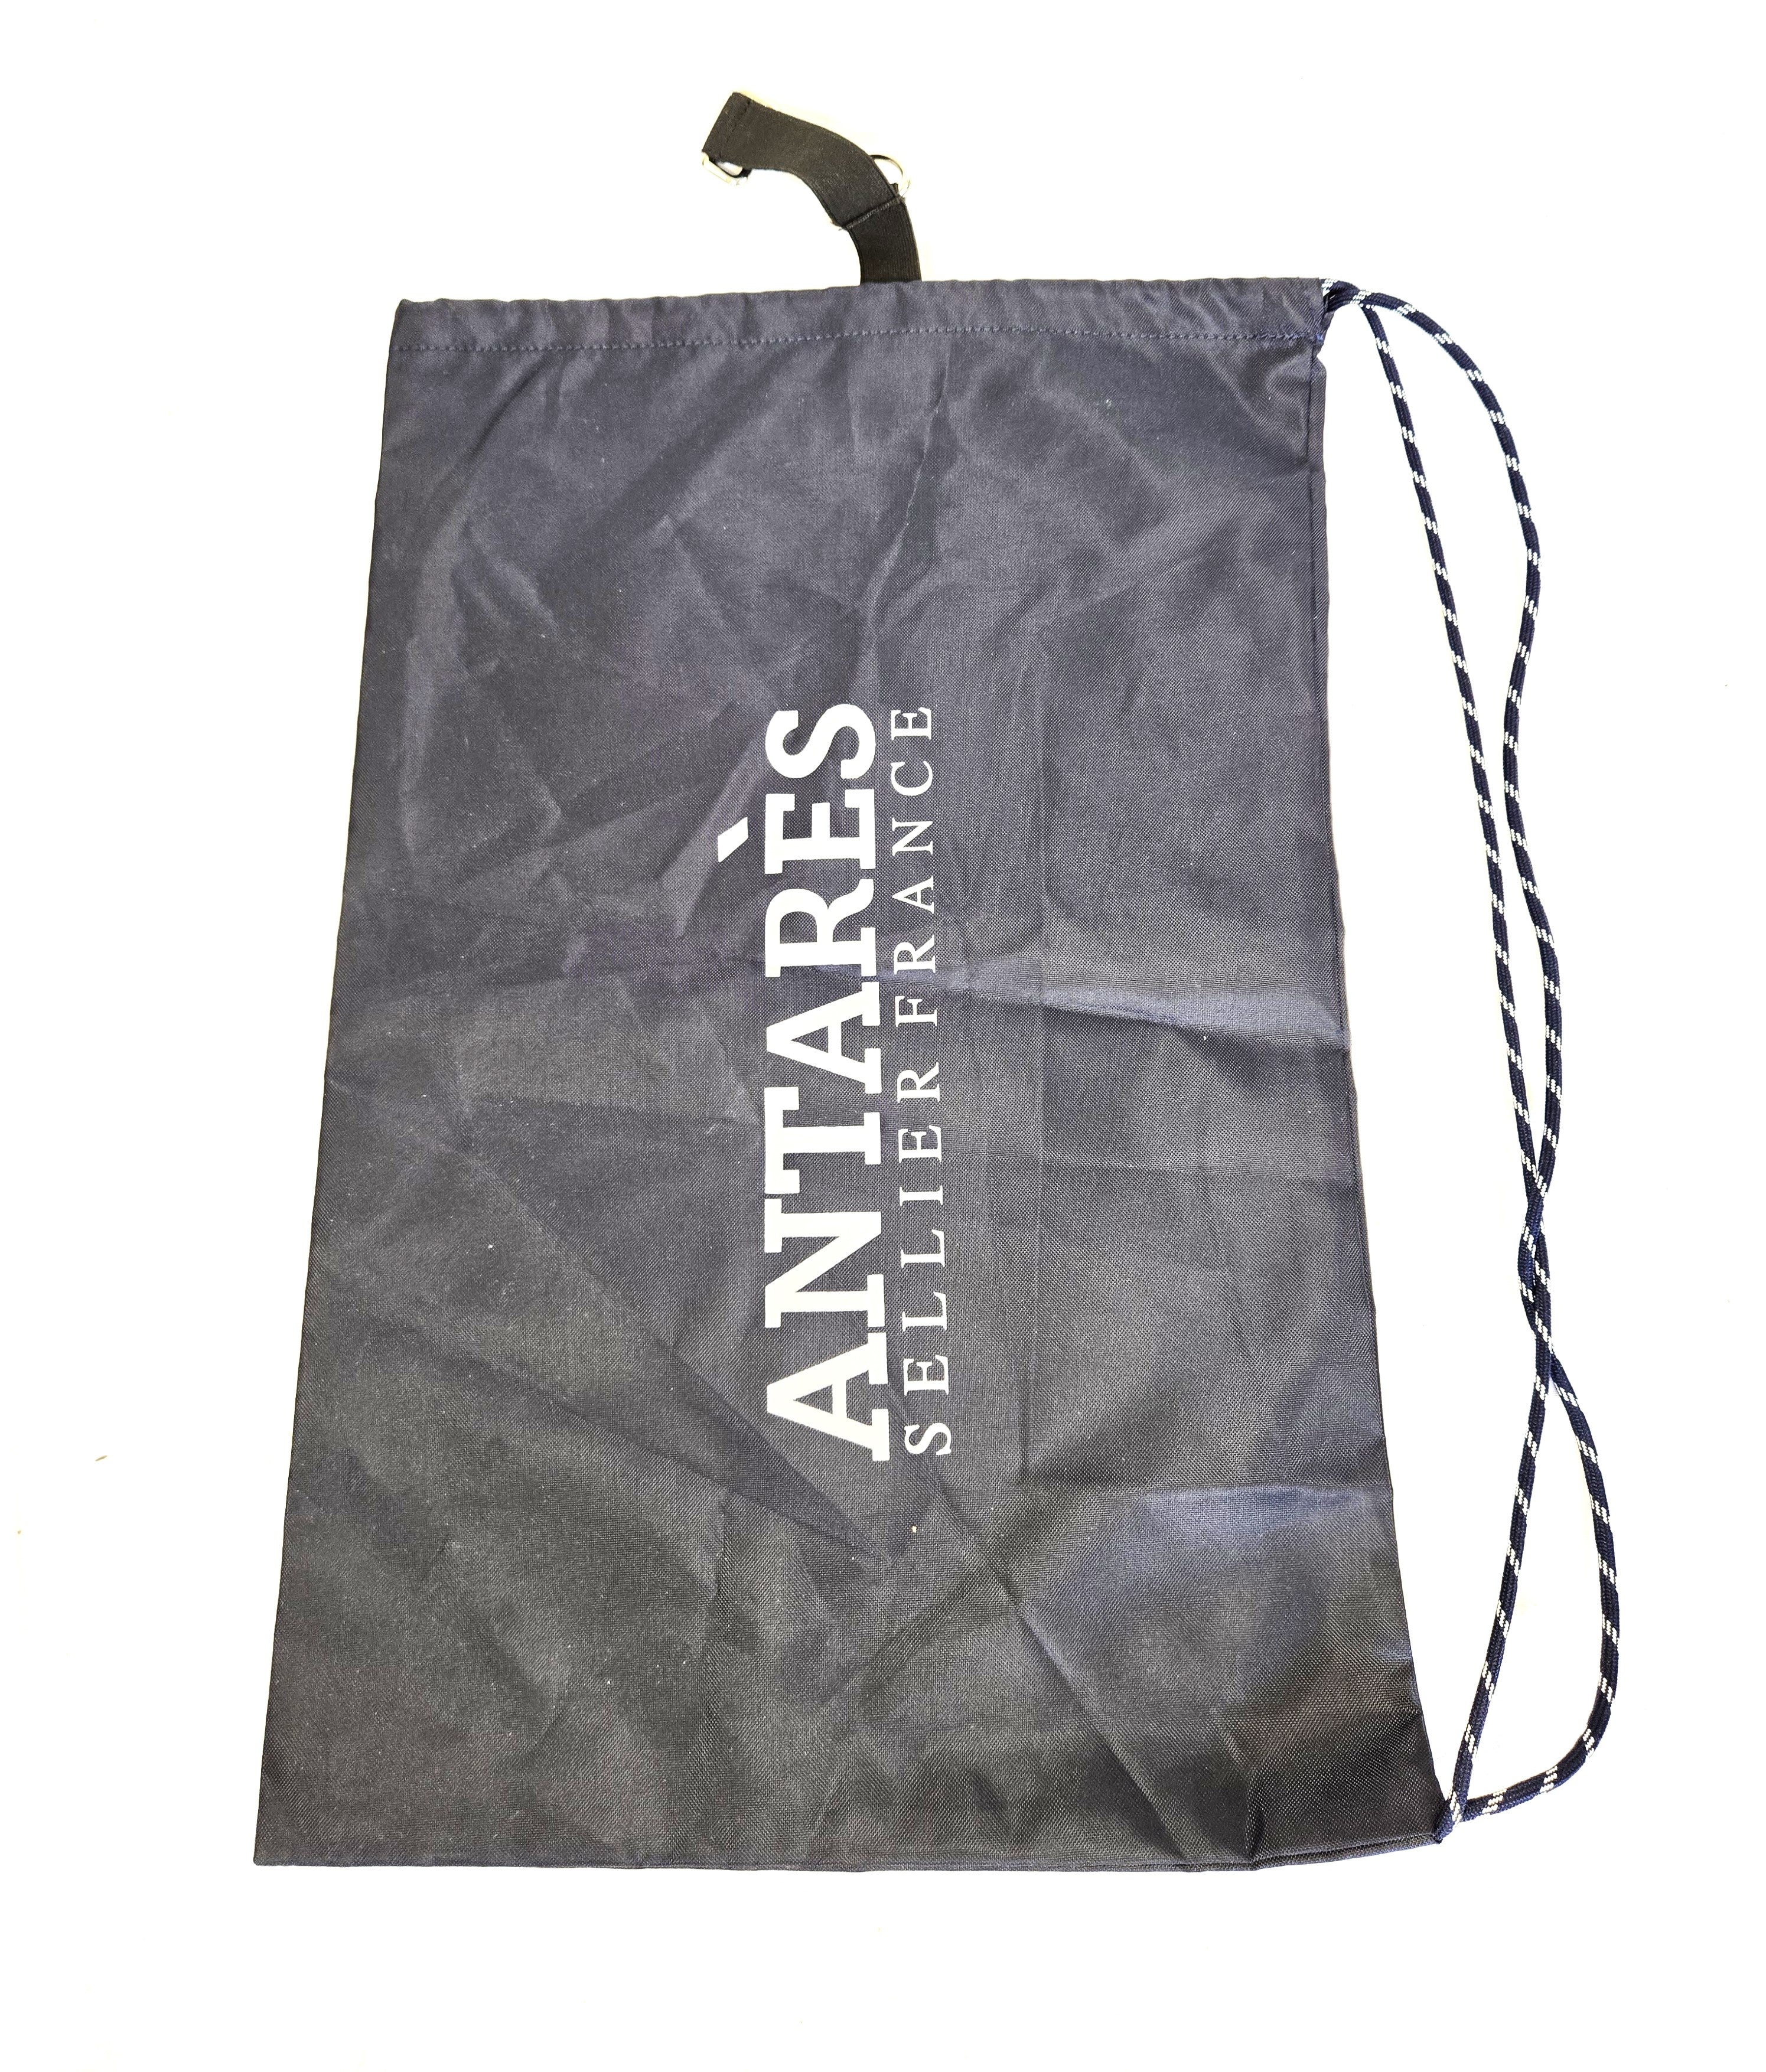 Antares Dust Bag